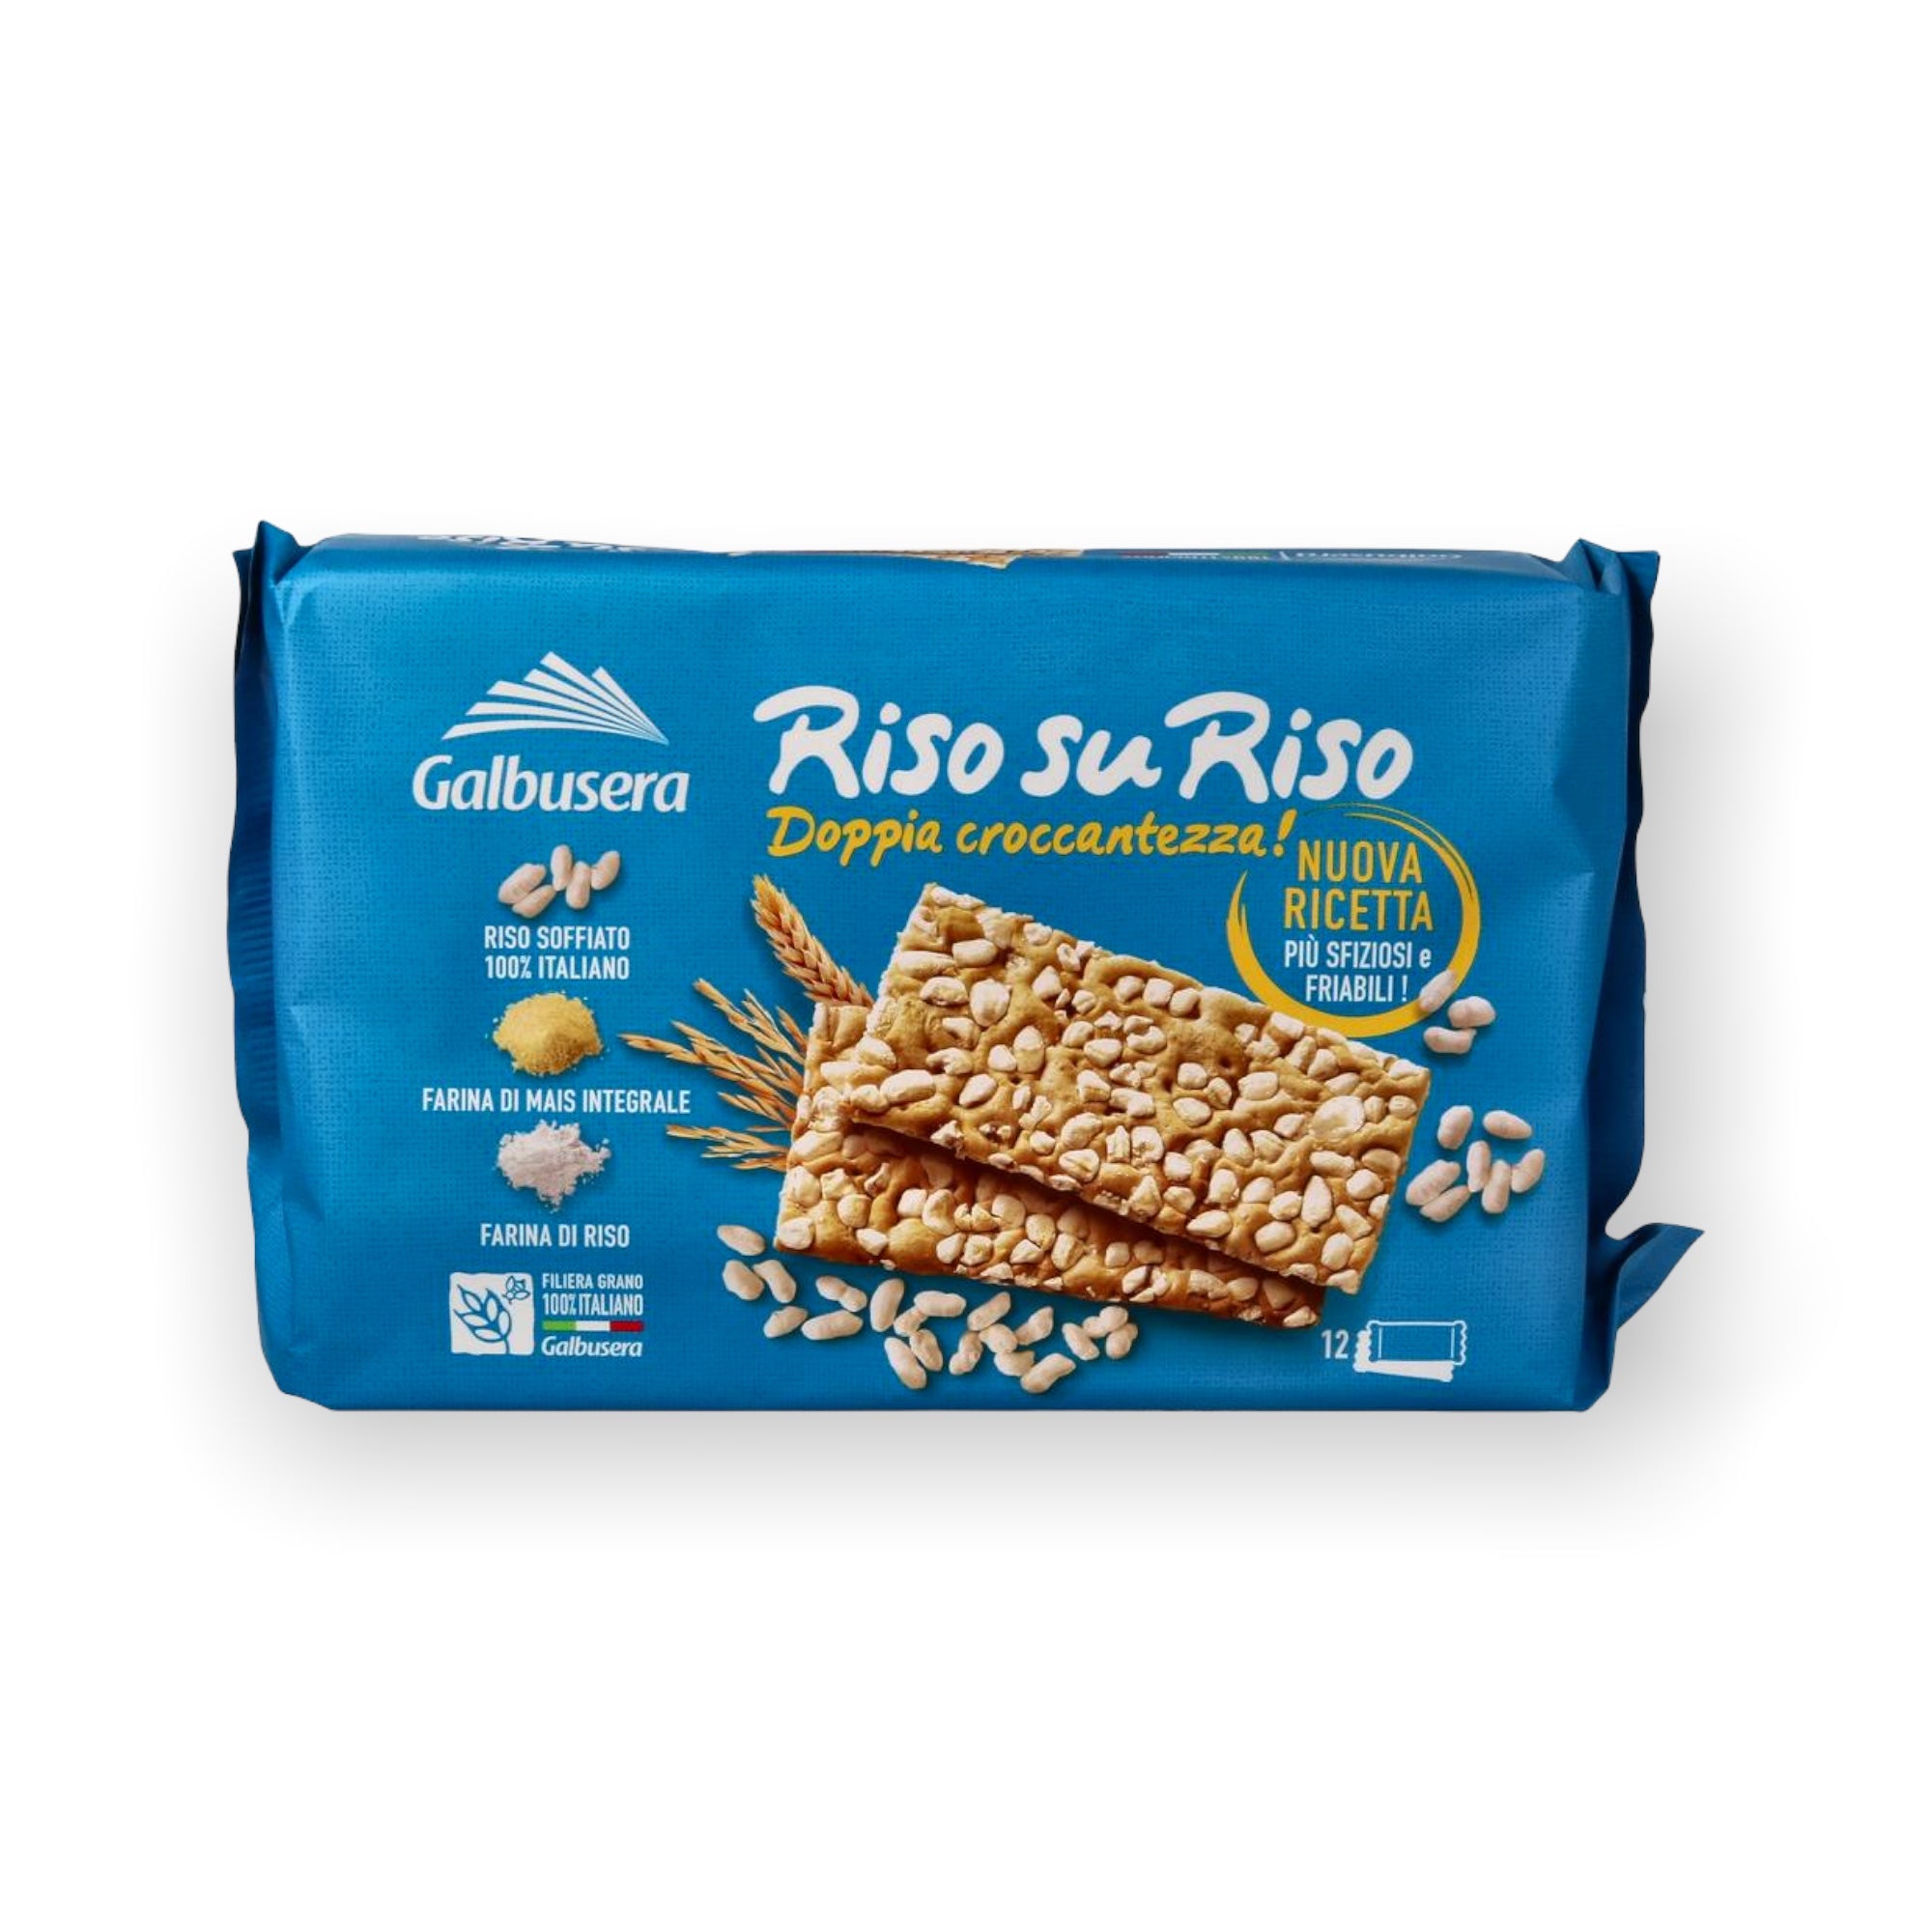 Mulino Bianco Salted Crackers  500g - Italian Crackers – Taste